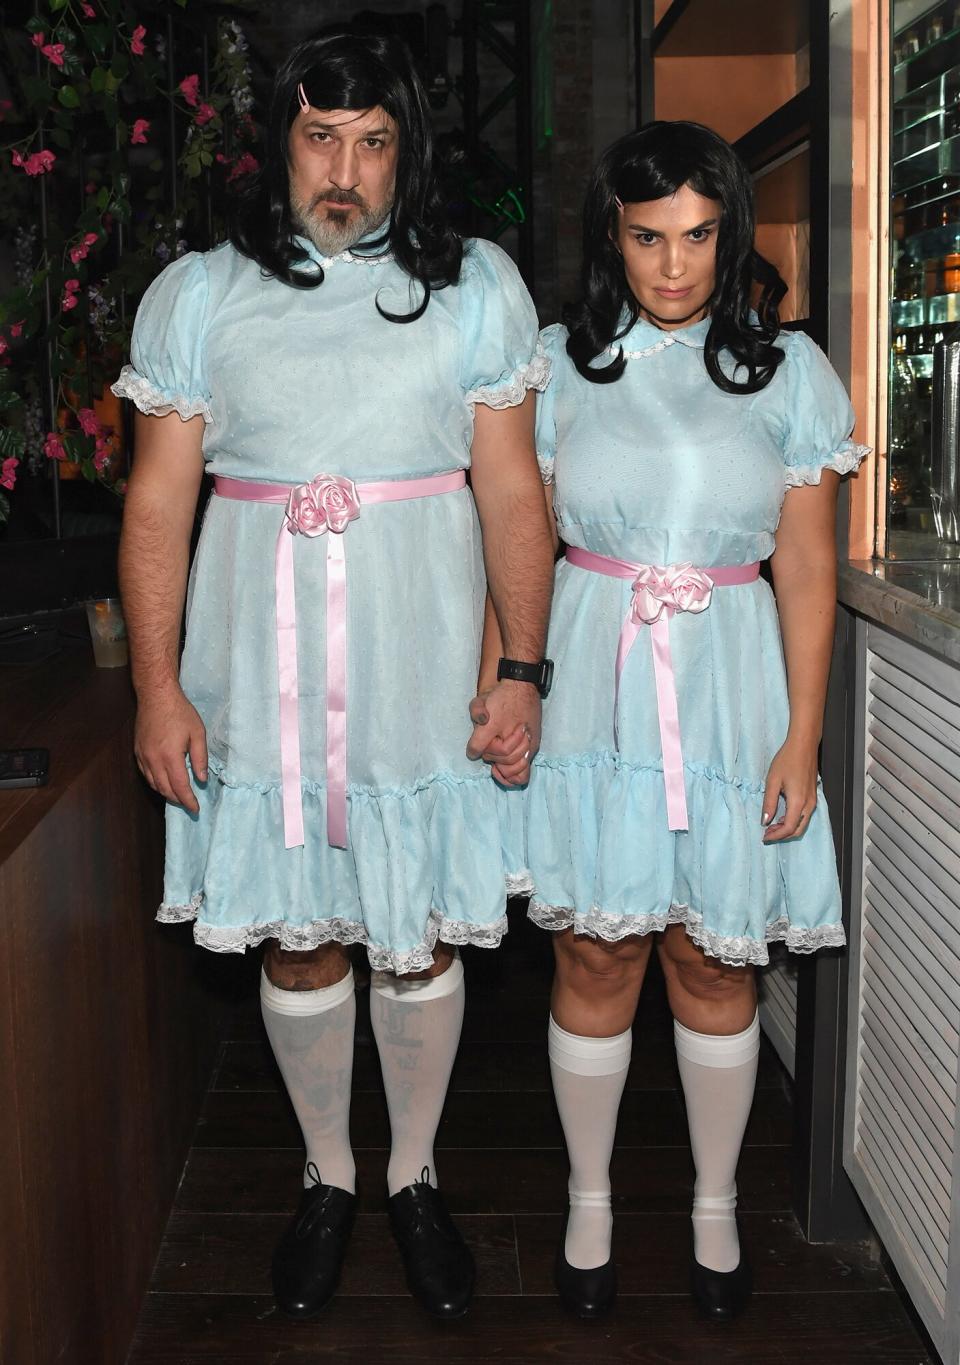 Joey Fatone (L) and Izabel Araujo attend Casamigos Halloween party at CATCH Las Vegas at ARIA Resort & Casino on October 27, 2018 in Las Vegas, Nevada